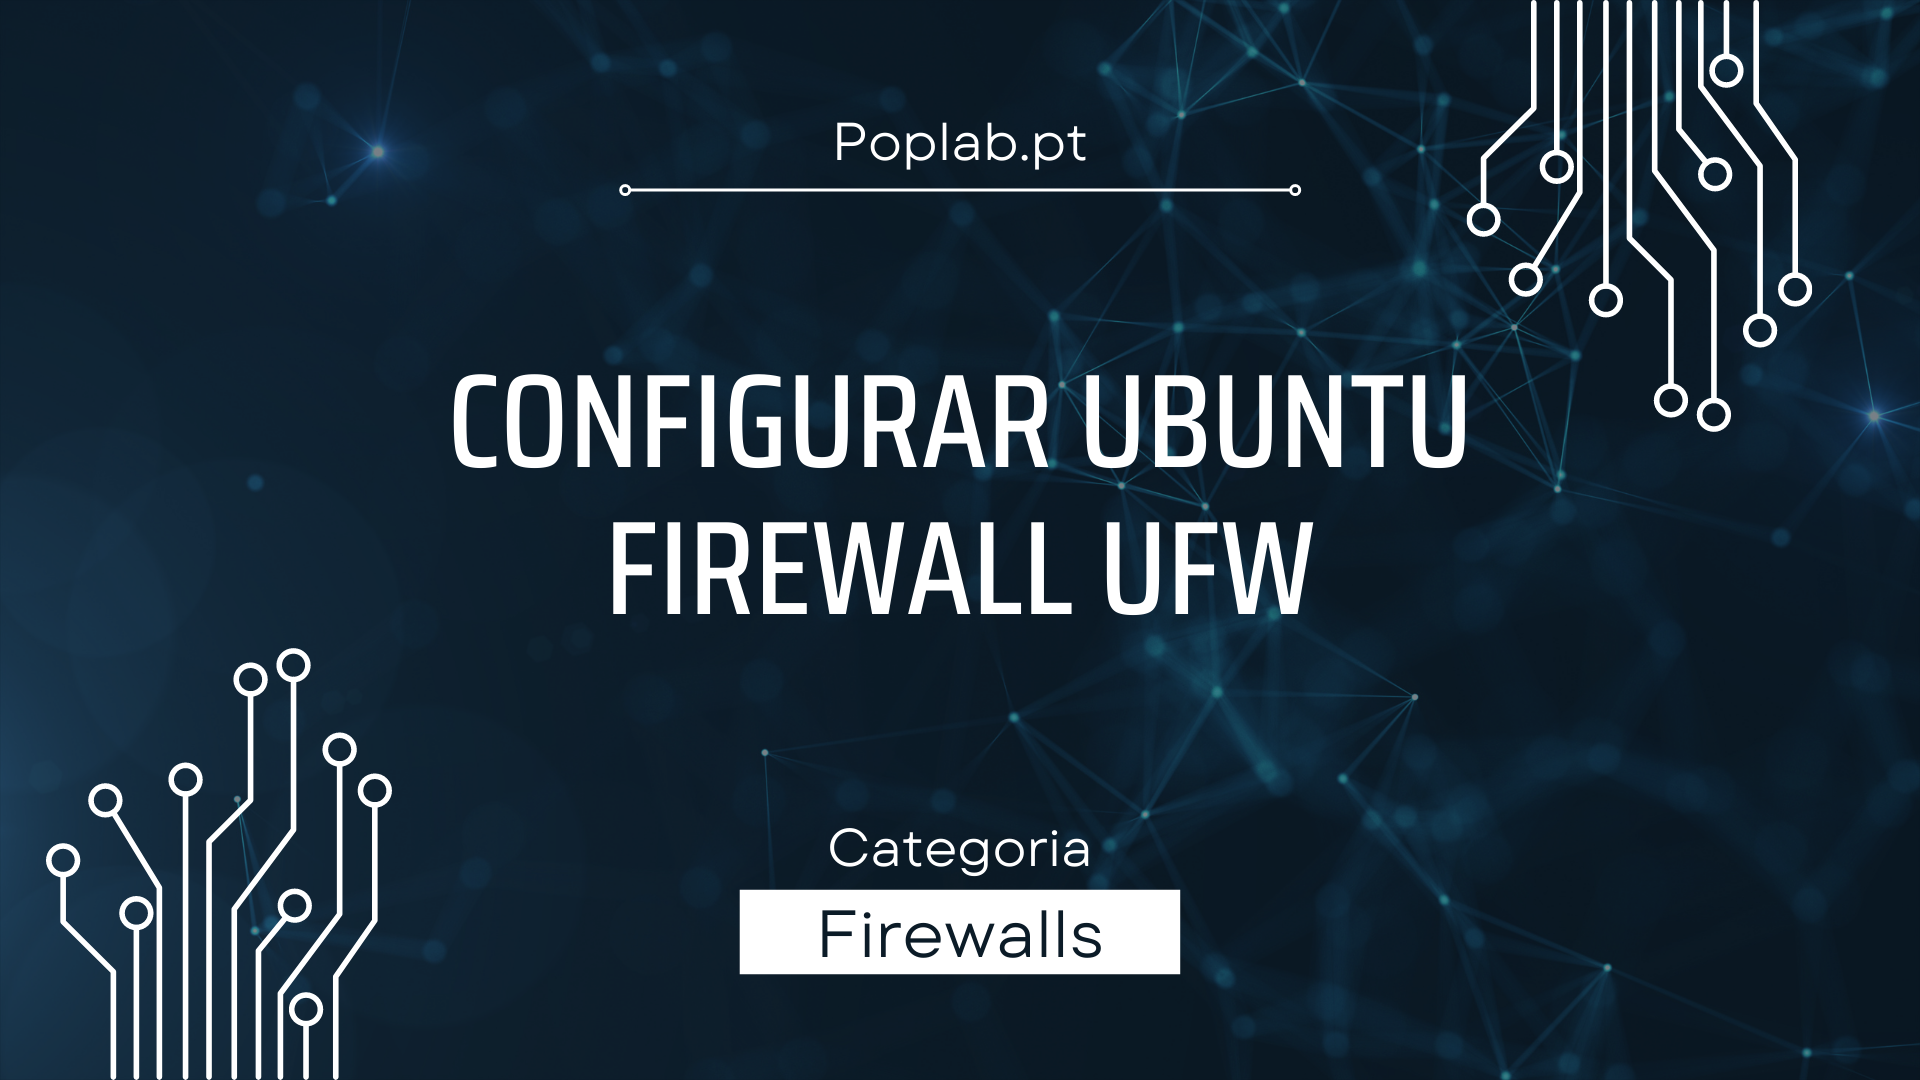 Como configurar Ubuntu firewall UFW